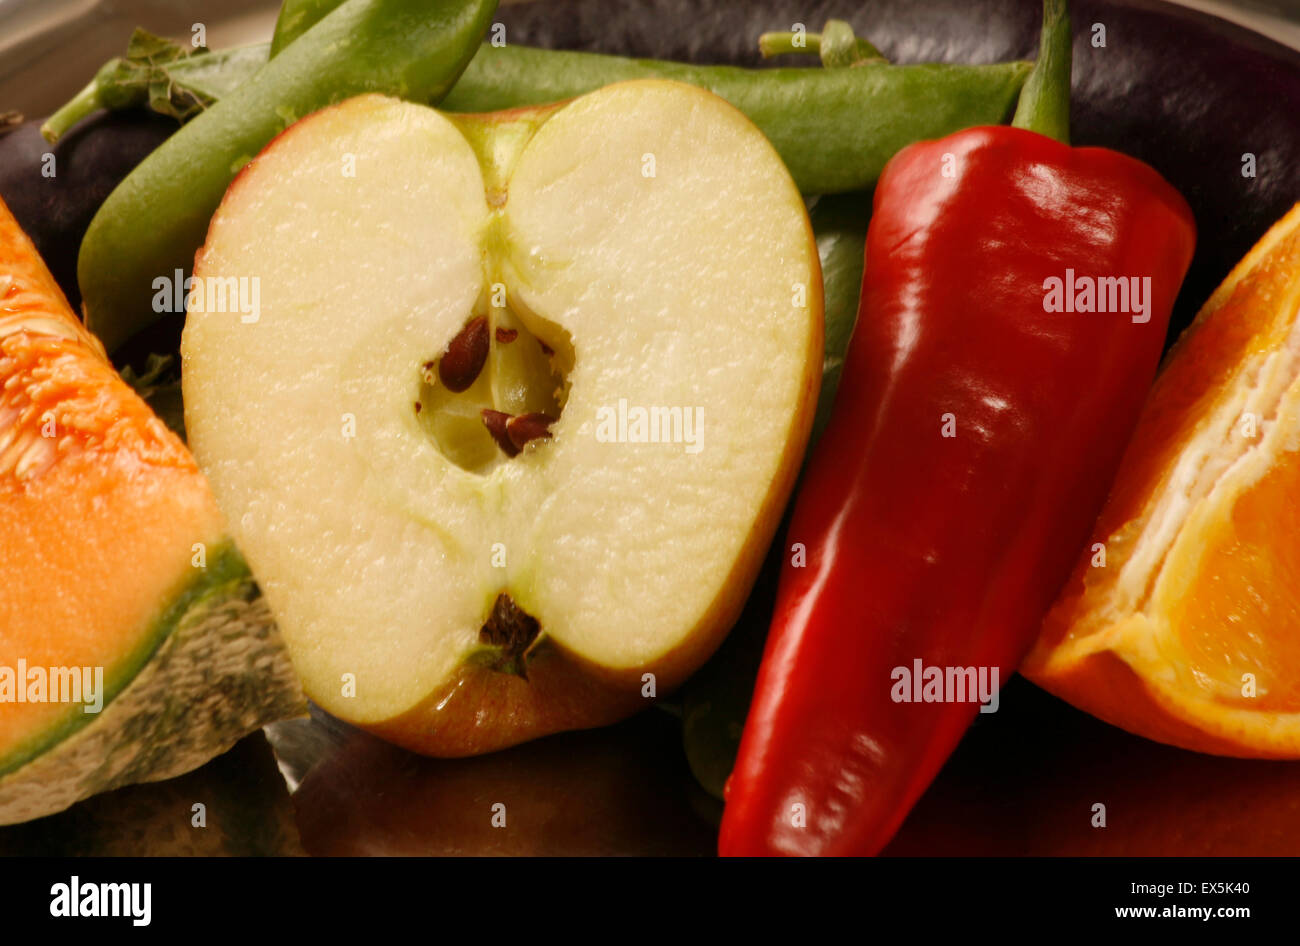 Fruit and Veg Stock Photo